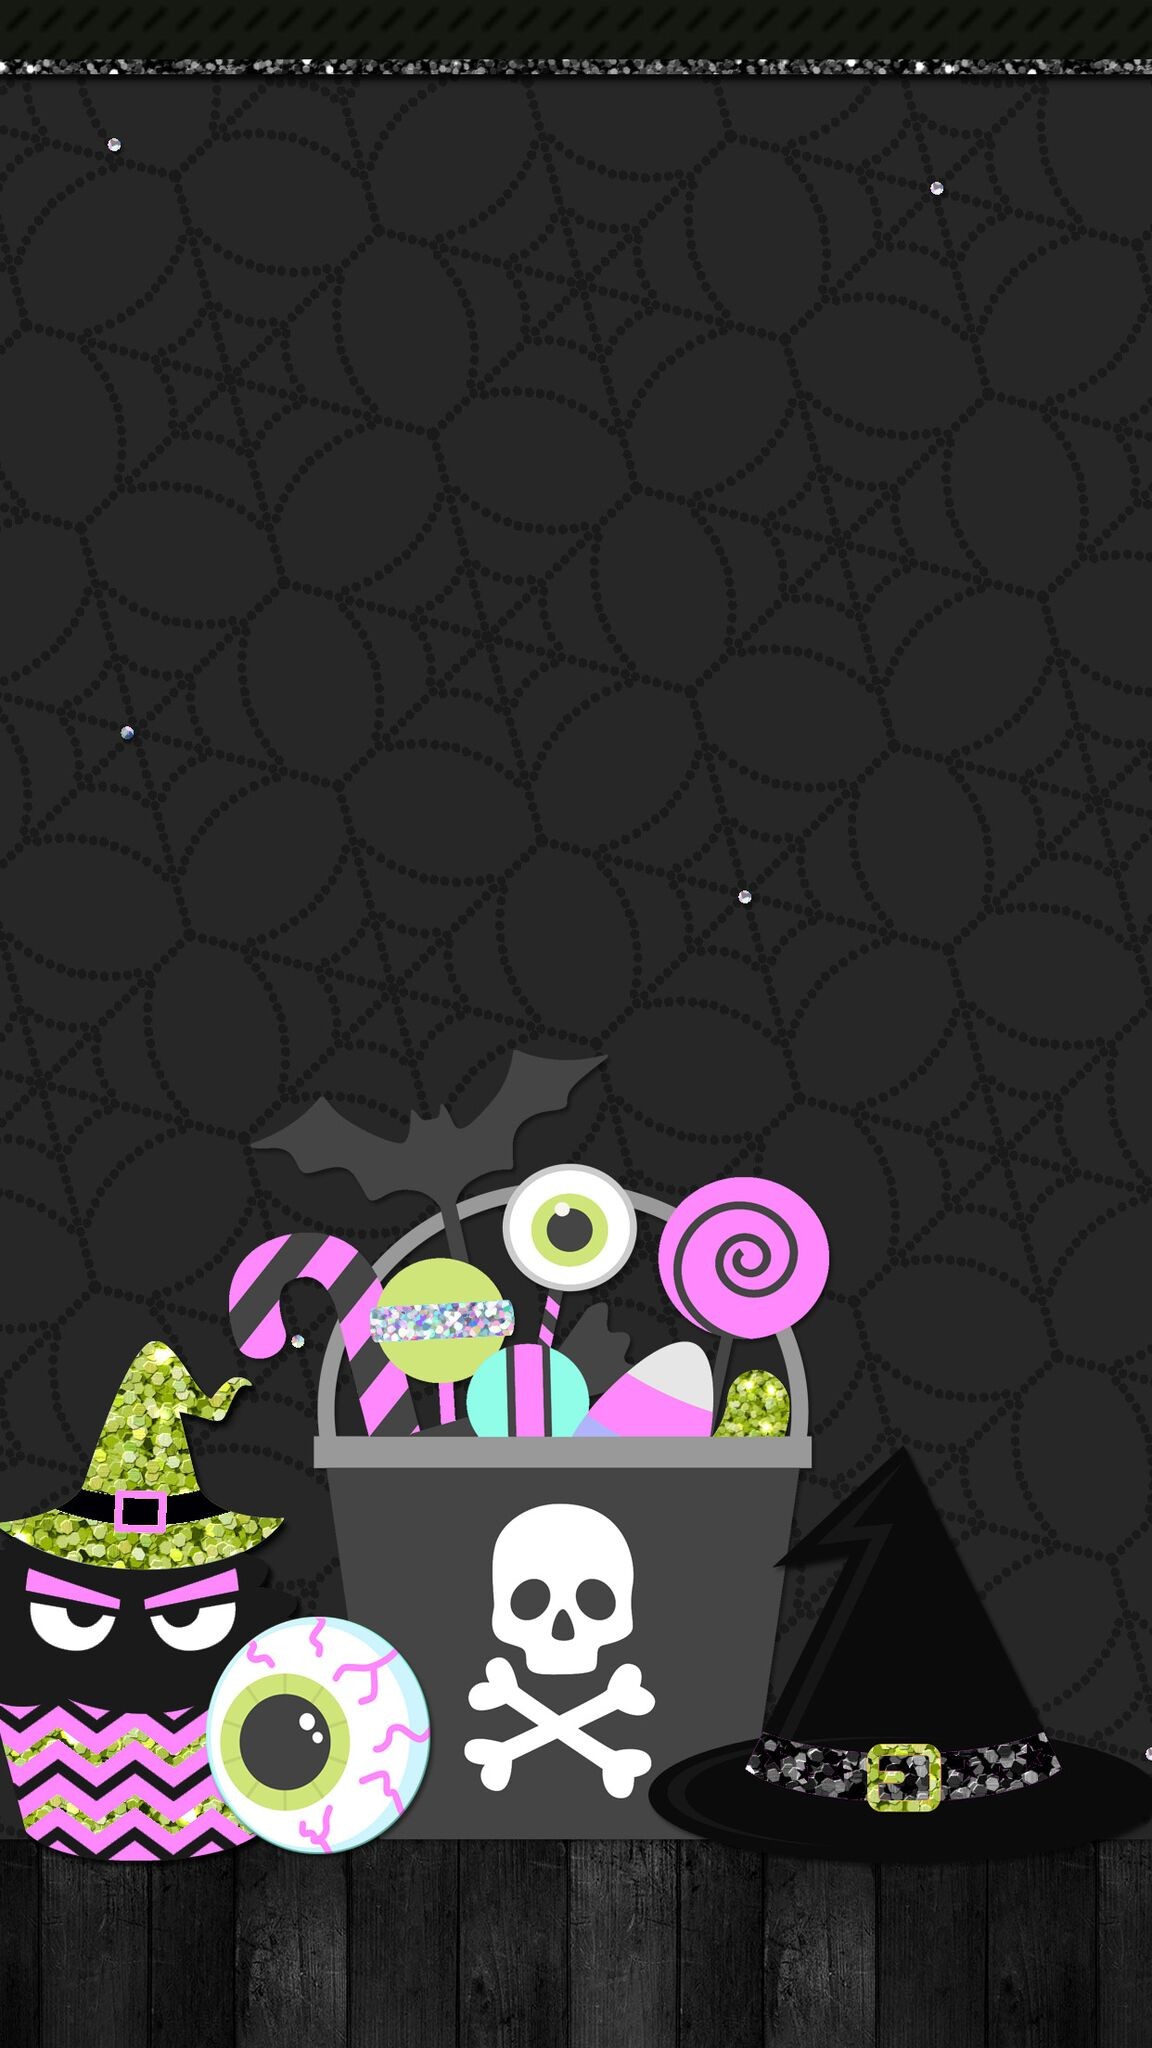 1152x2048 Dropbox - Creepy cute theme walls